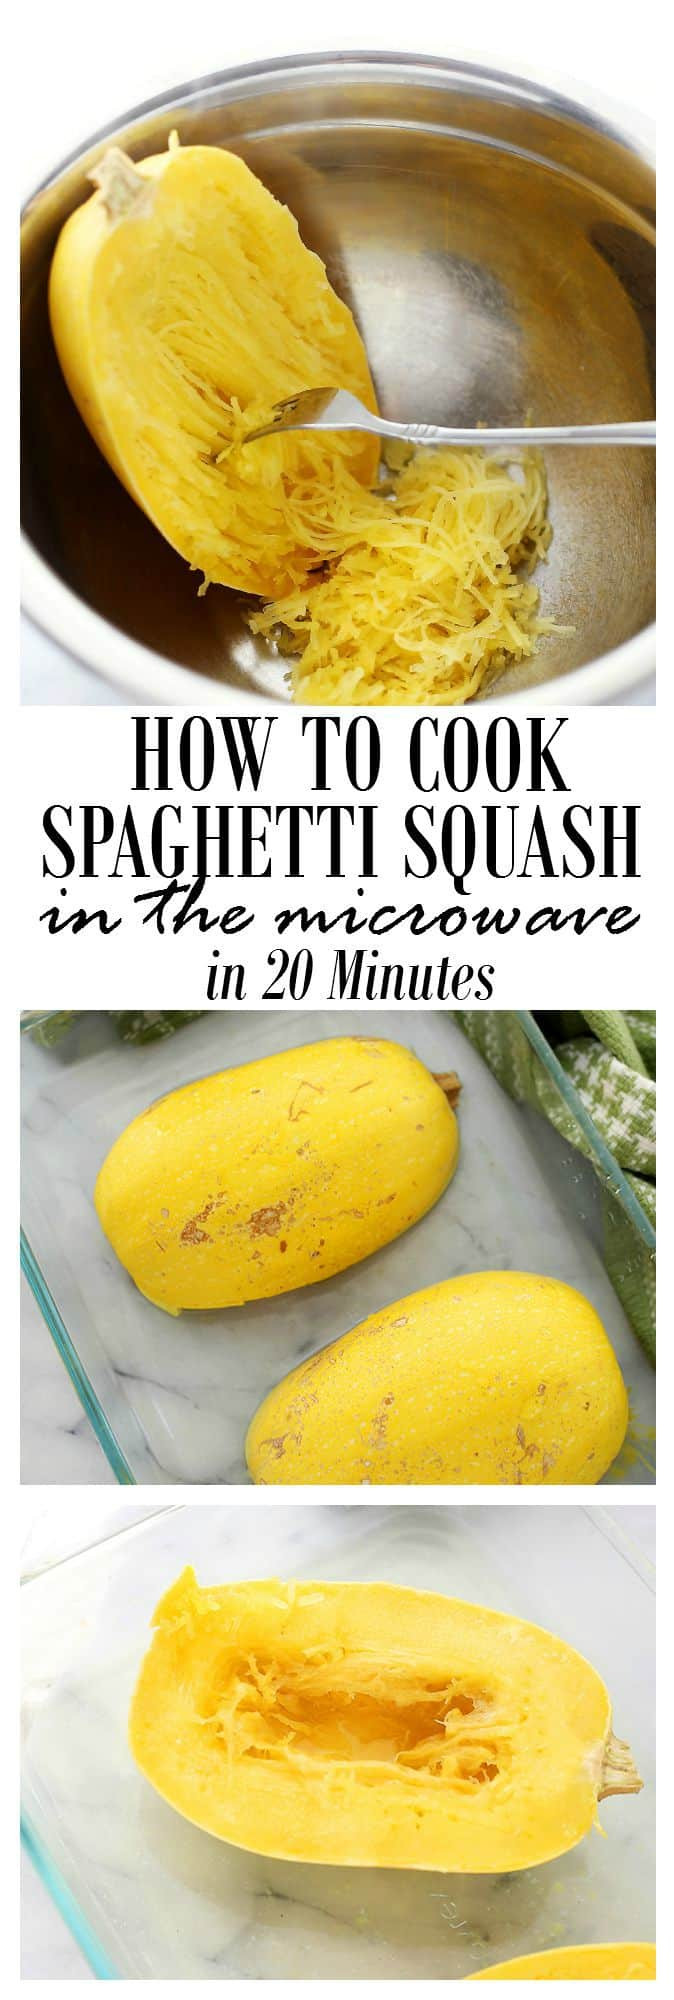 Cooking Spaghetti Squash In The Microwave
 Mediterranean Spaghetti Squash Boats